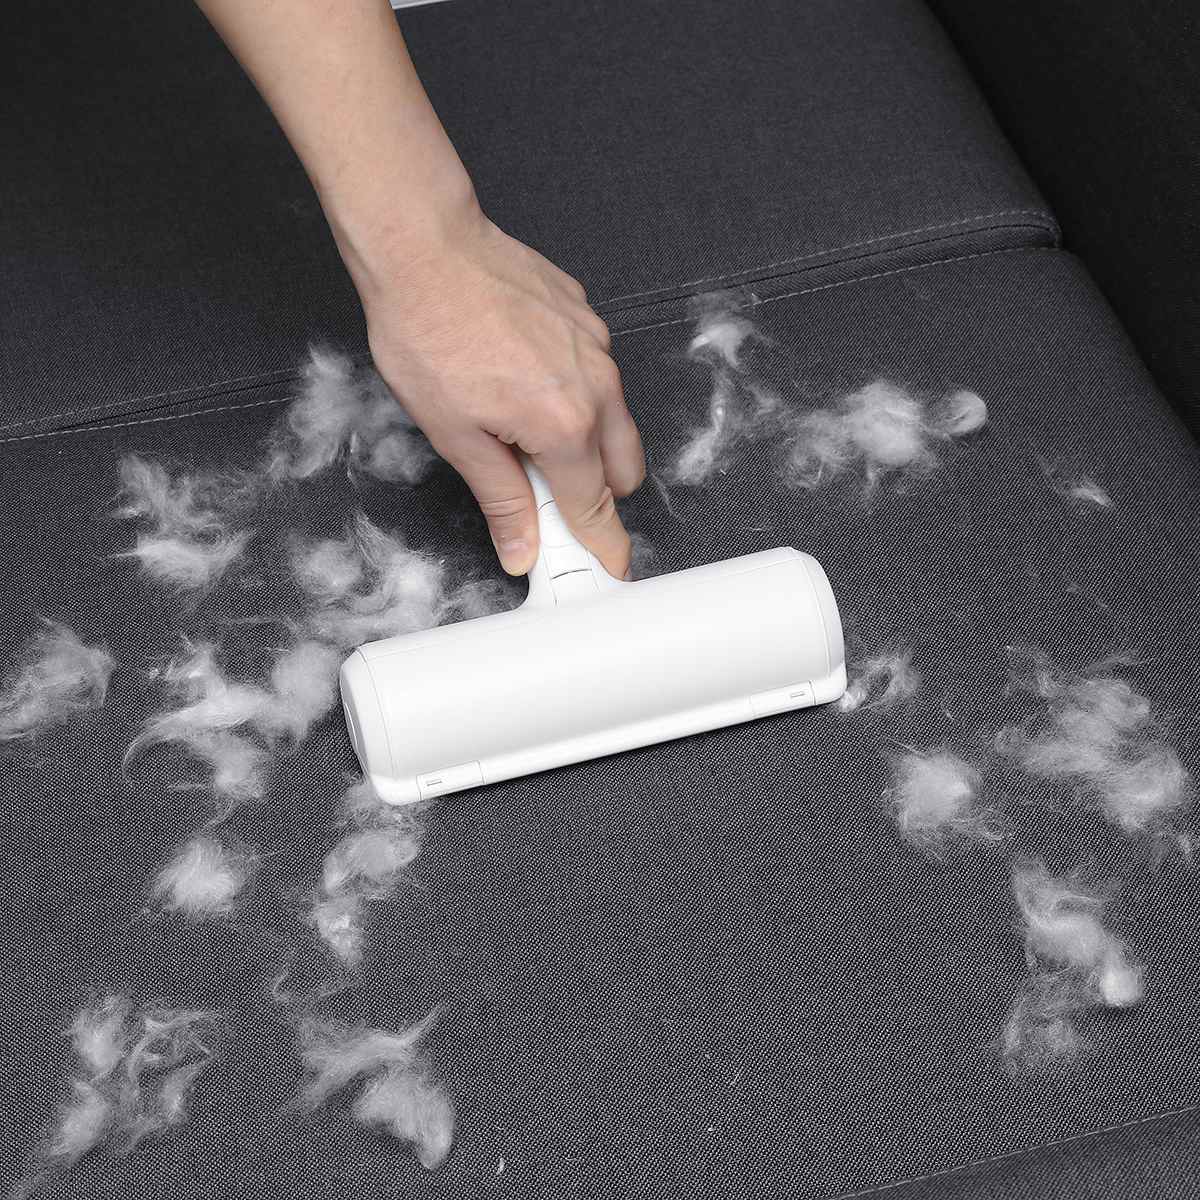 Pet-Hair-Remover-Cleaning-Brush-Fur-Removing-Roller-Lint-Brush-Dog-Cat-Animals-Hair-Brush-Car-Clothi-1636265-4